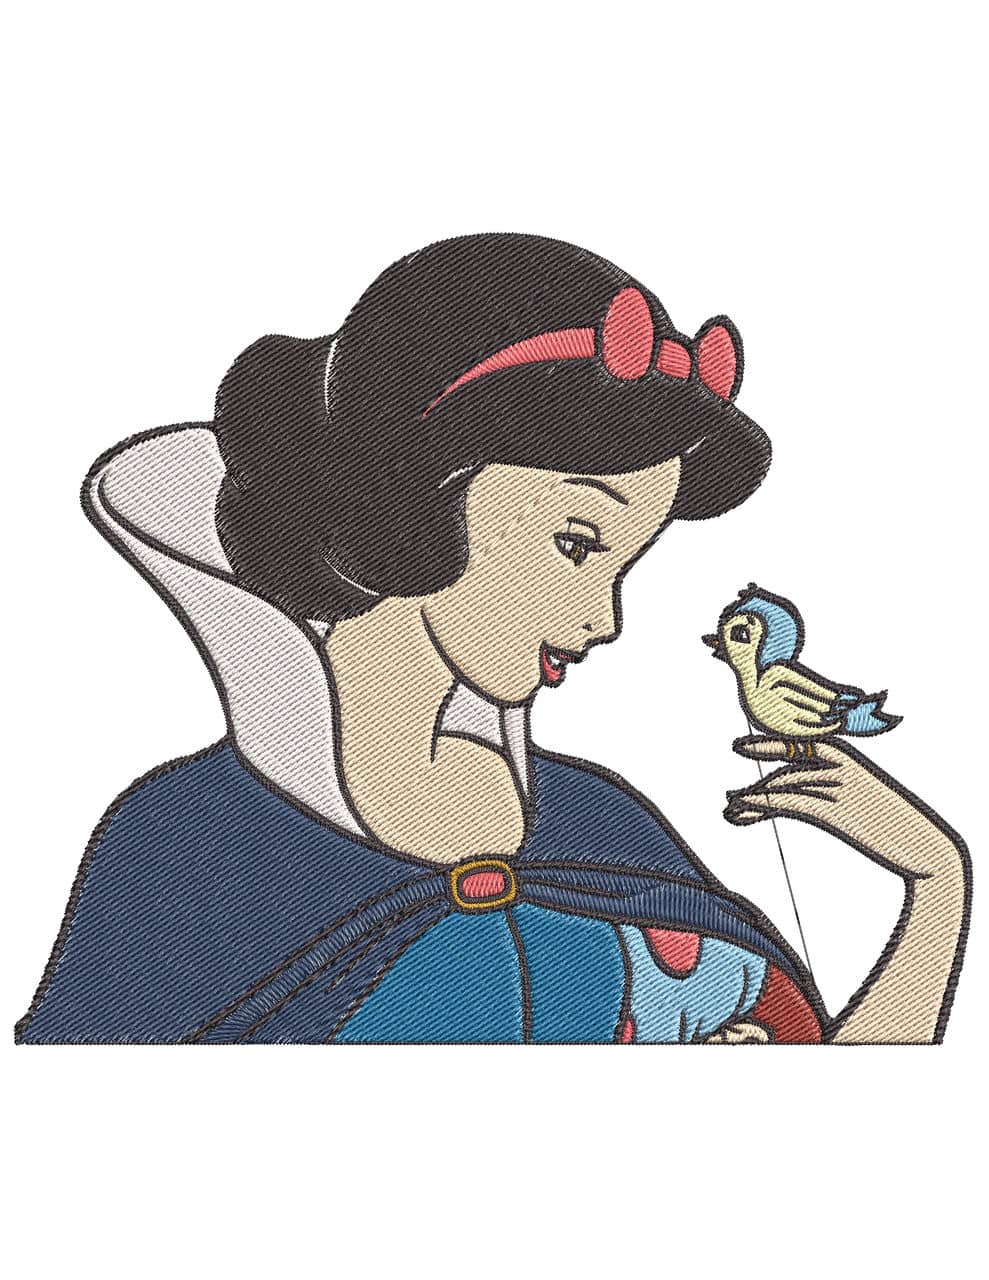 Snow White Princess Disney Seven Dwarfs Embroidery Design 012 Digital Embroidery Designs 